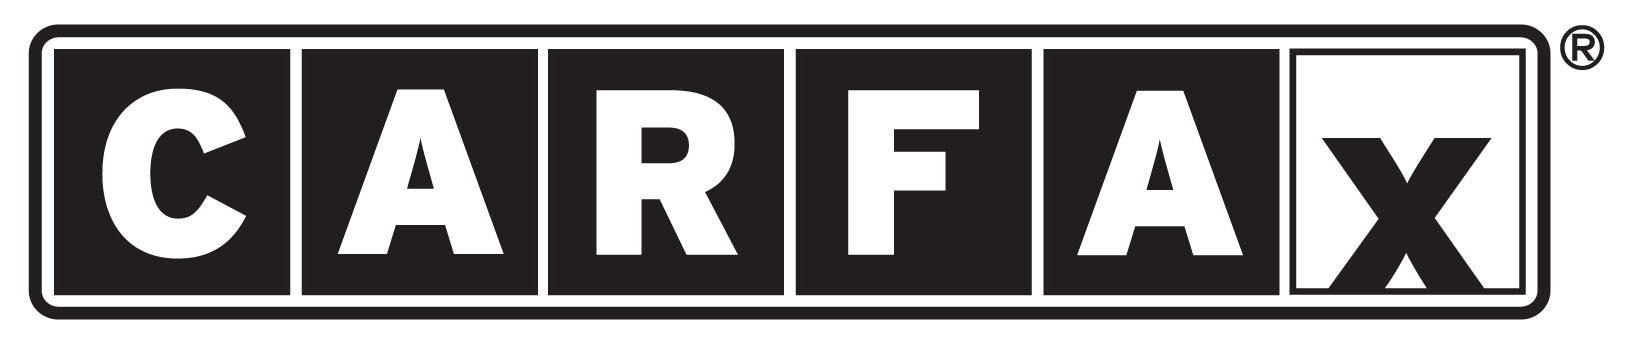 Carfax logo. (PRNewsFoto/Carfax)